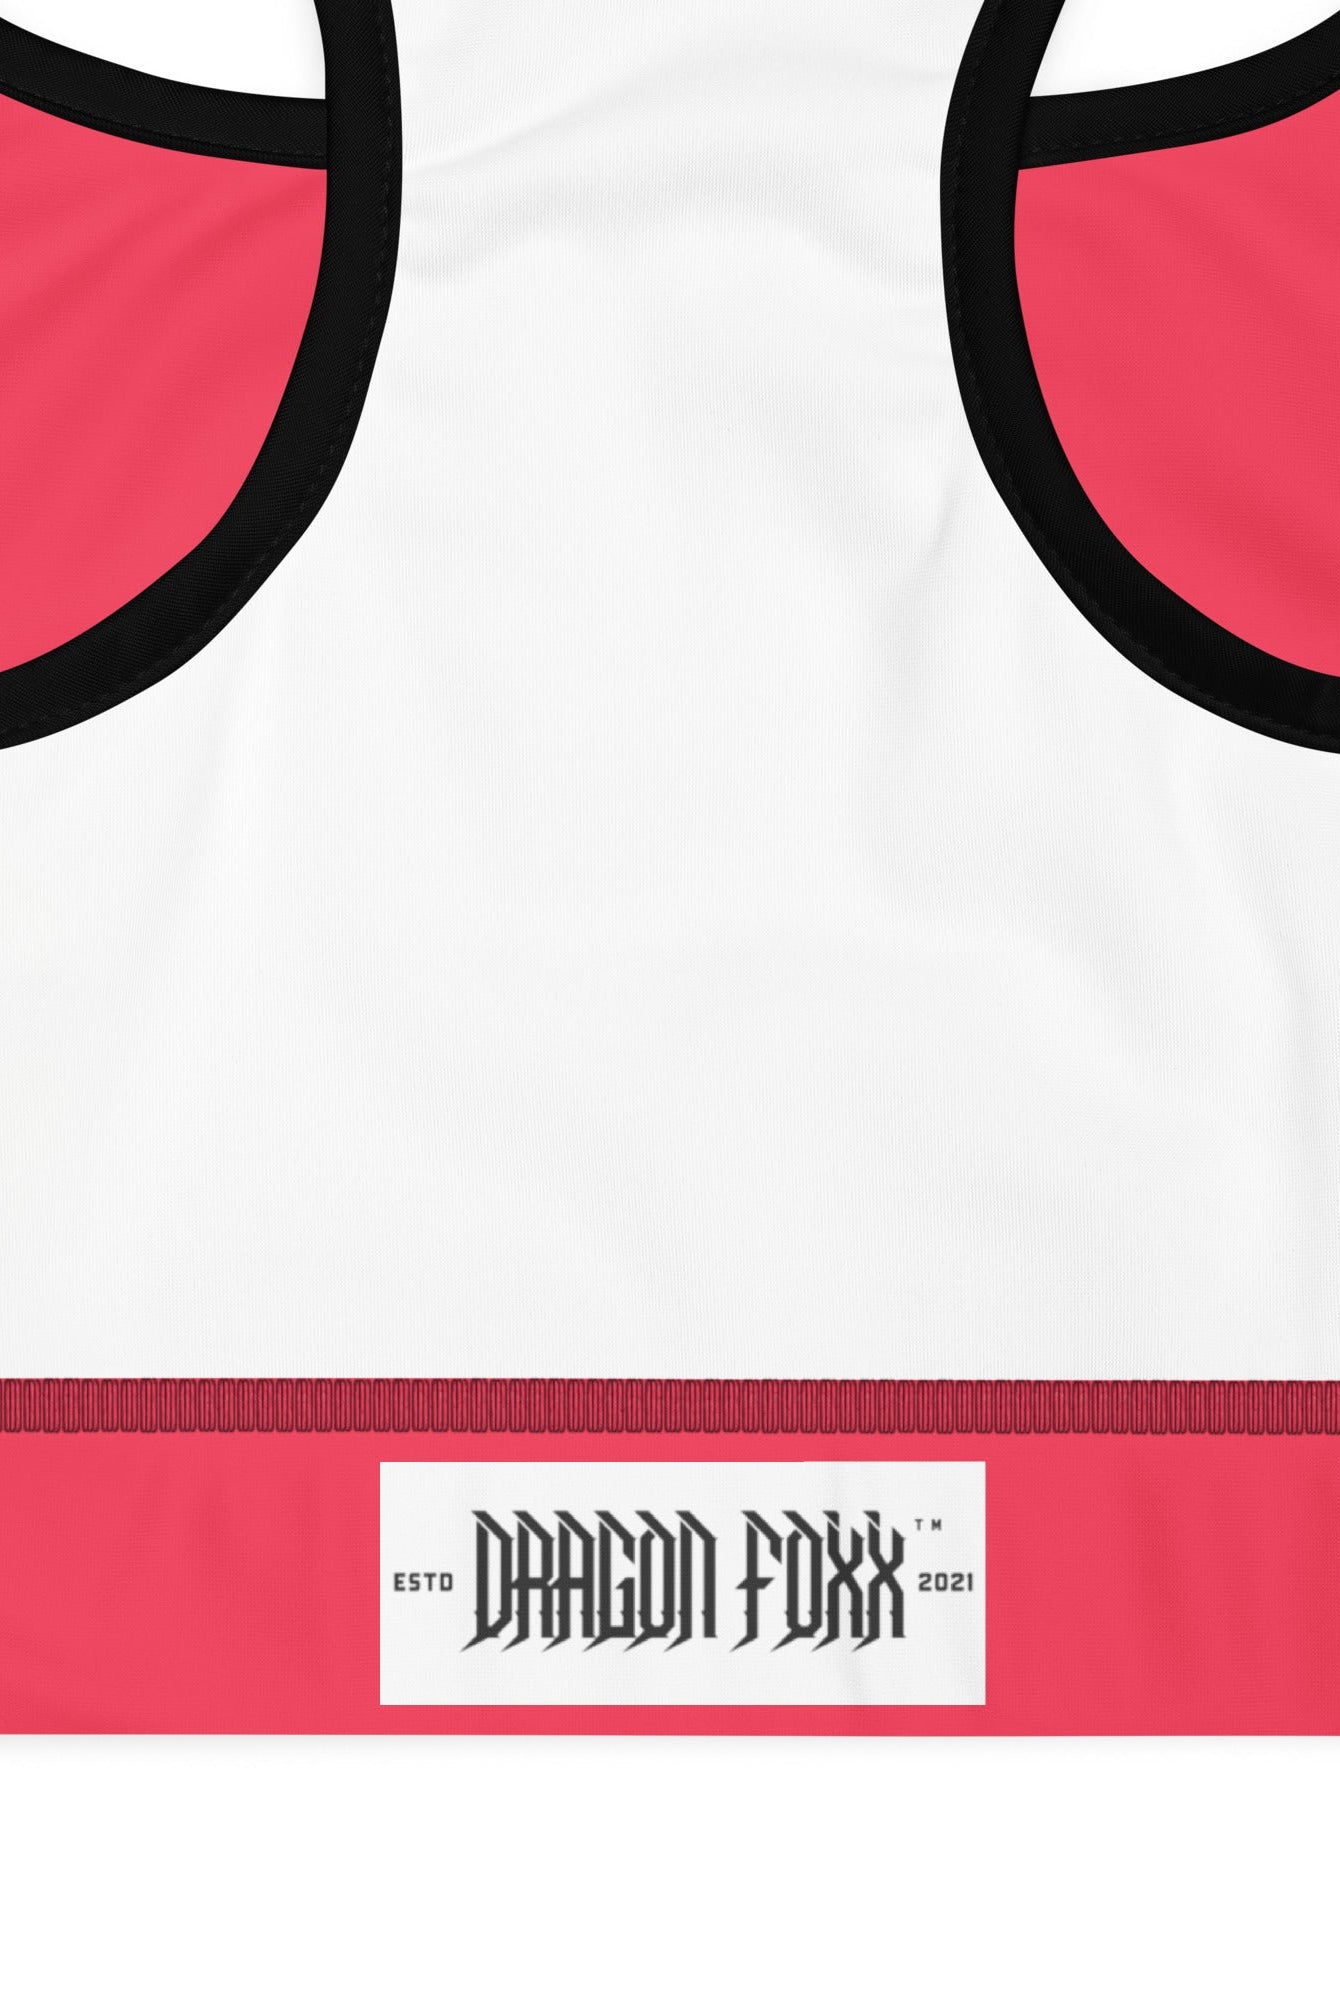 Dragon Foxx™ Radical Red Sports Bra - Dragon Foxx™ Sports bra - DRAGON FOXX™ - Dragon Foxx™ Radical Red Sports Bra - 6892385_9104 - XS - Radical Red - Activewear - Dragon Foxx™ - Dragon Foxx™ Radical Red Sports Bra